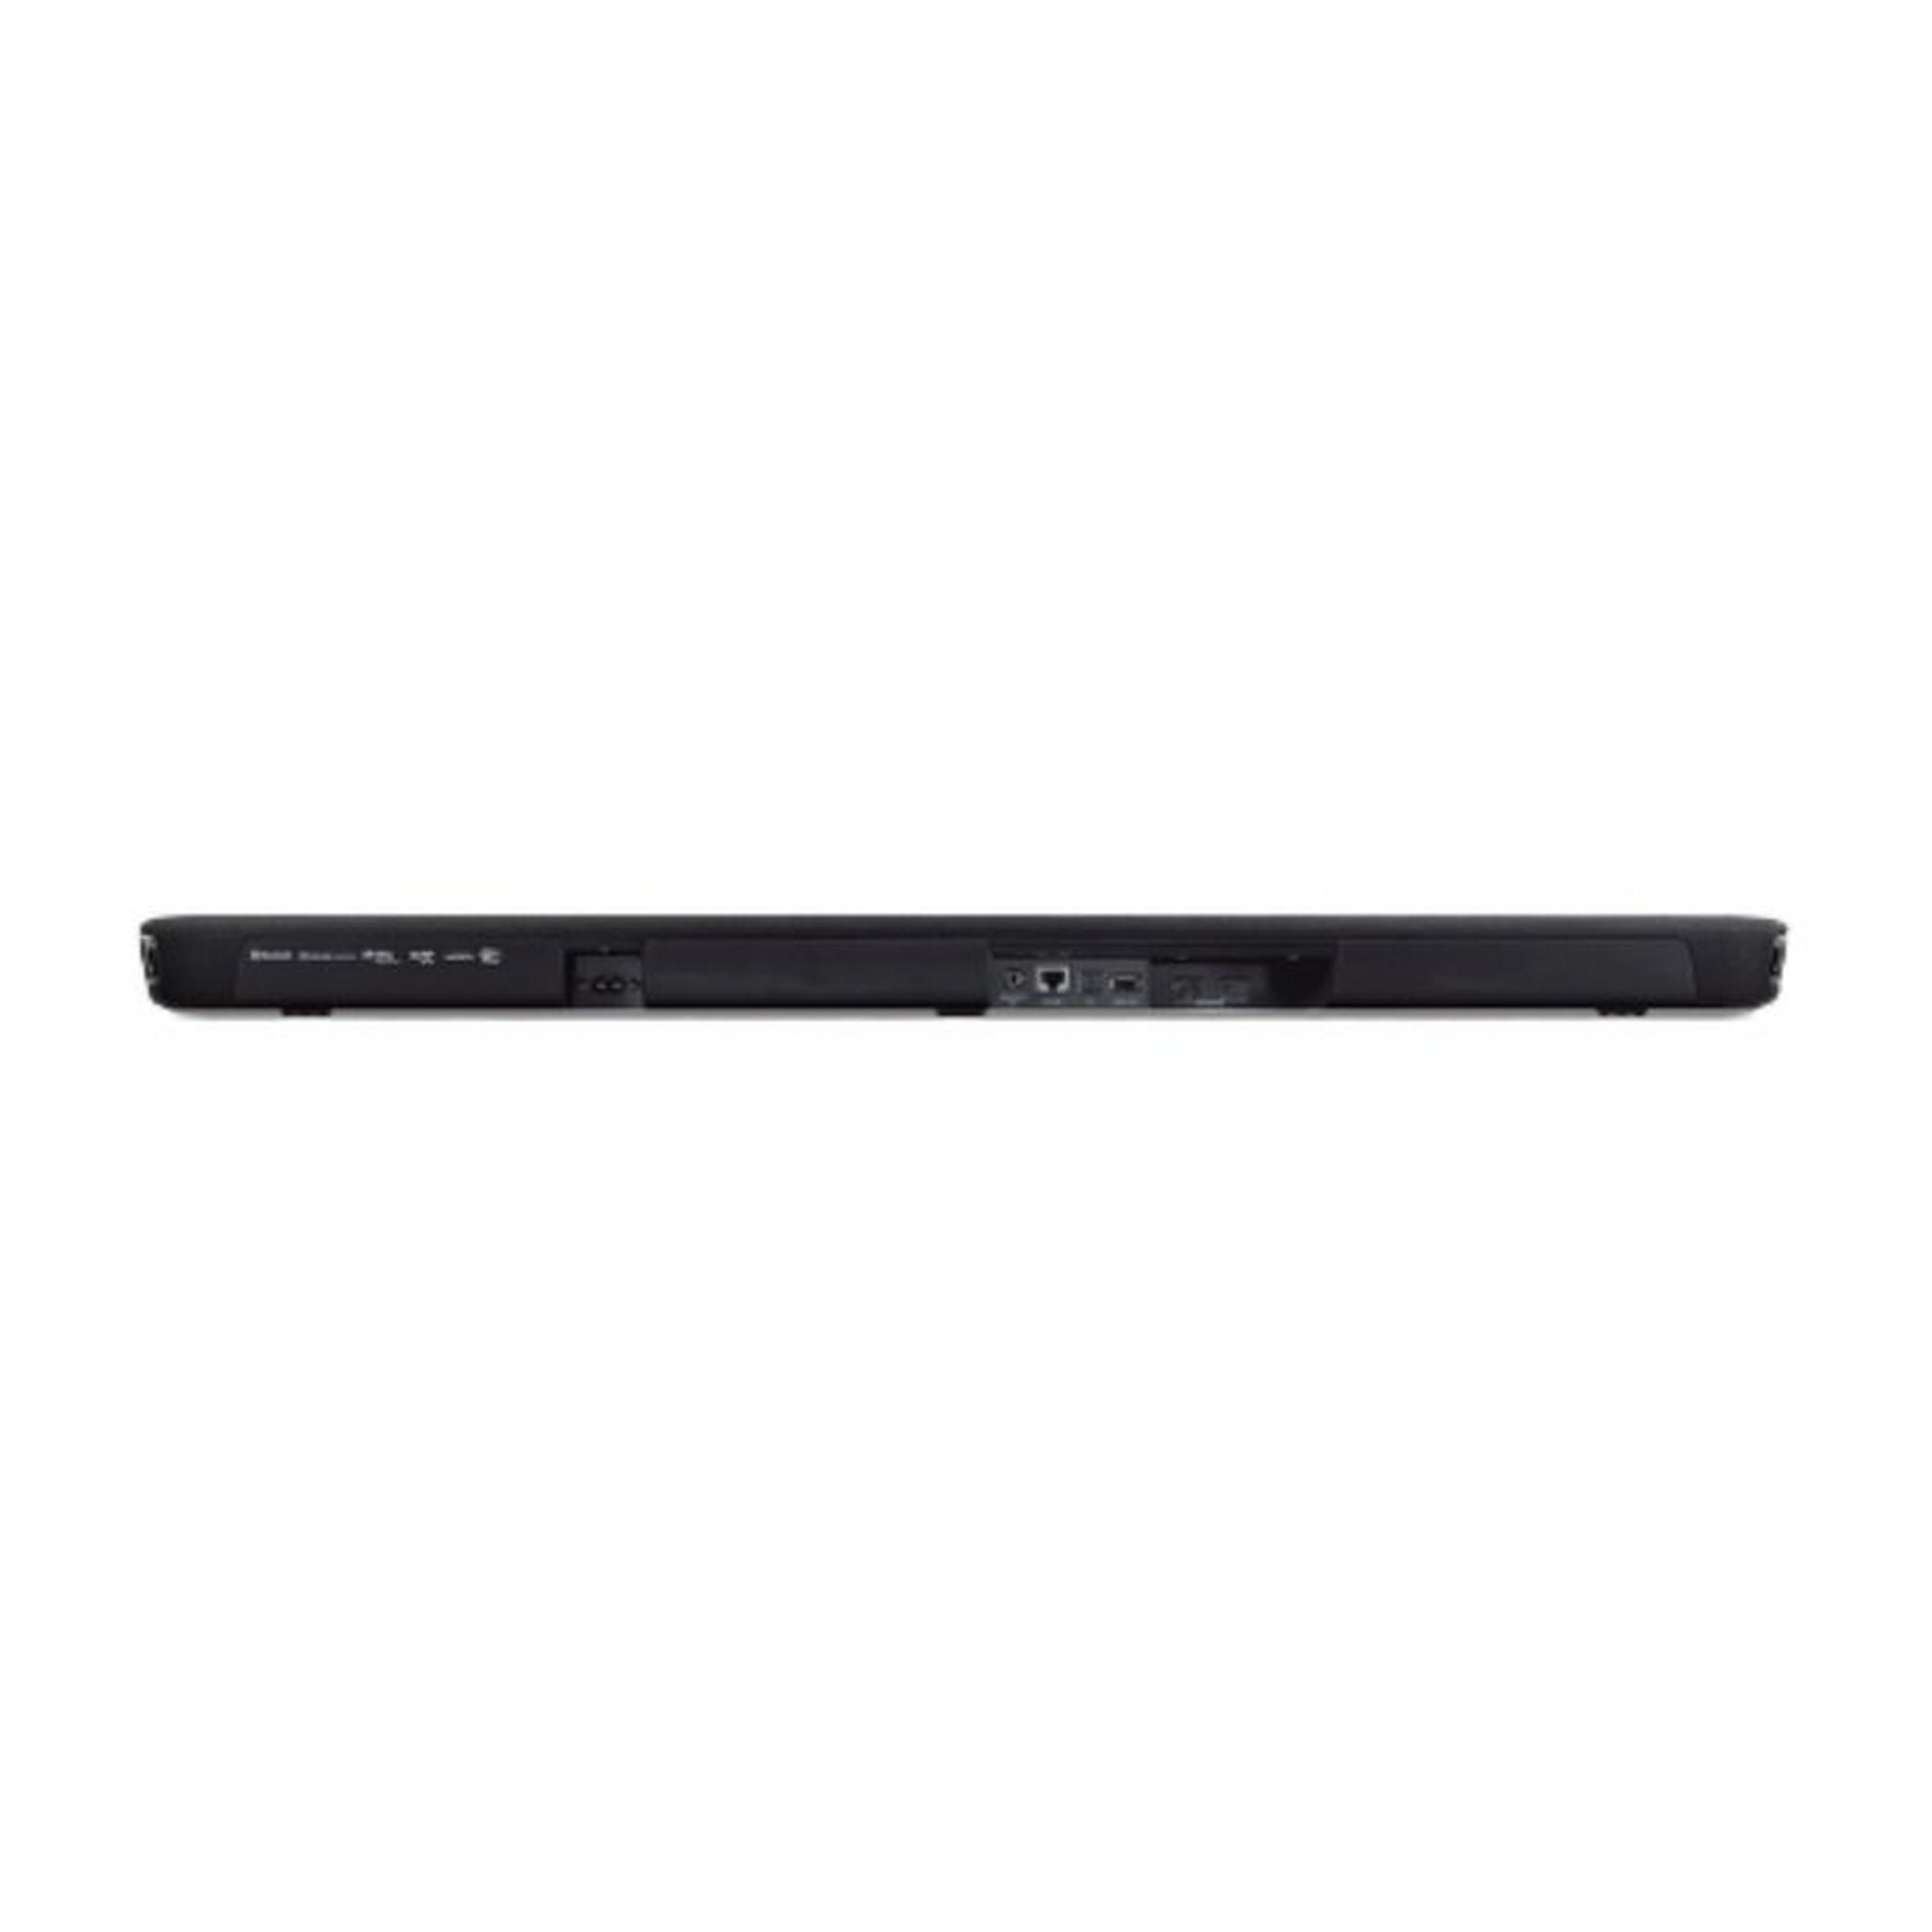 Yamaha 120W 2Ch Wireless Soundbar - Black (YAS-109)